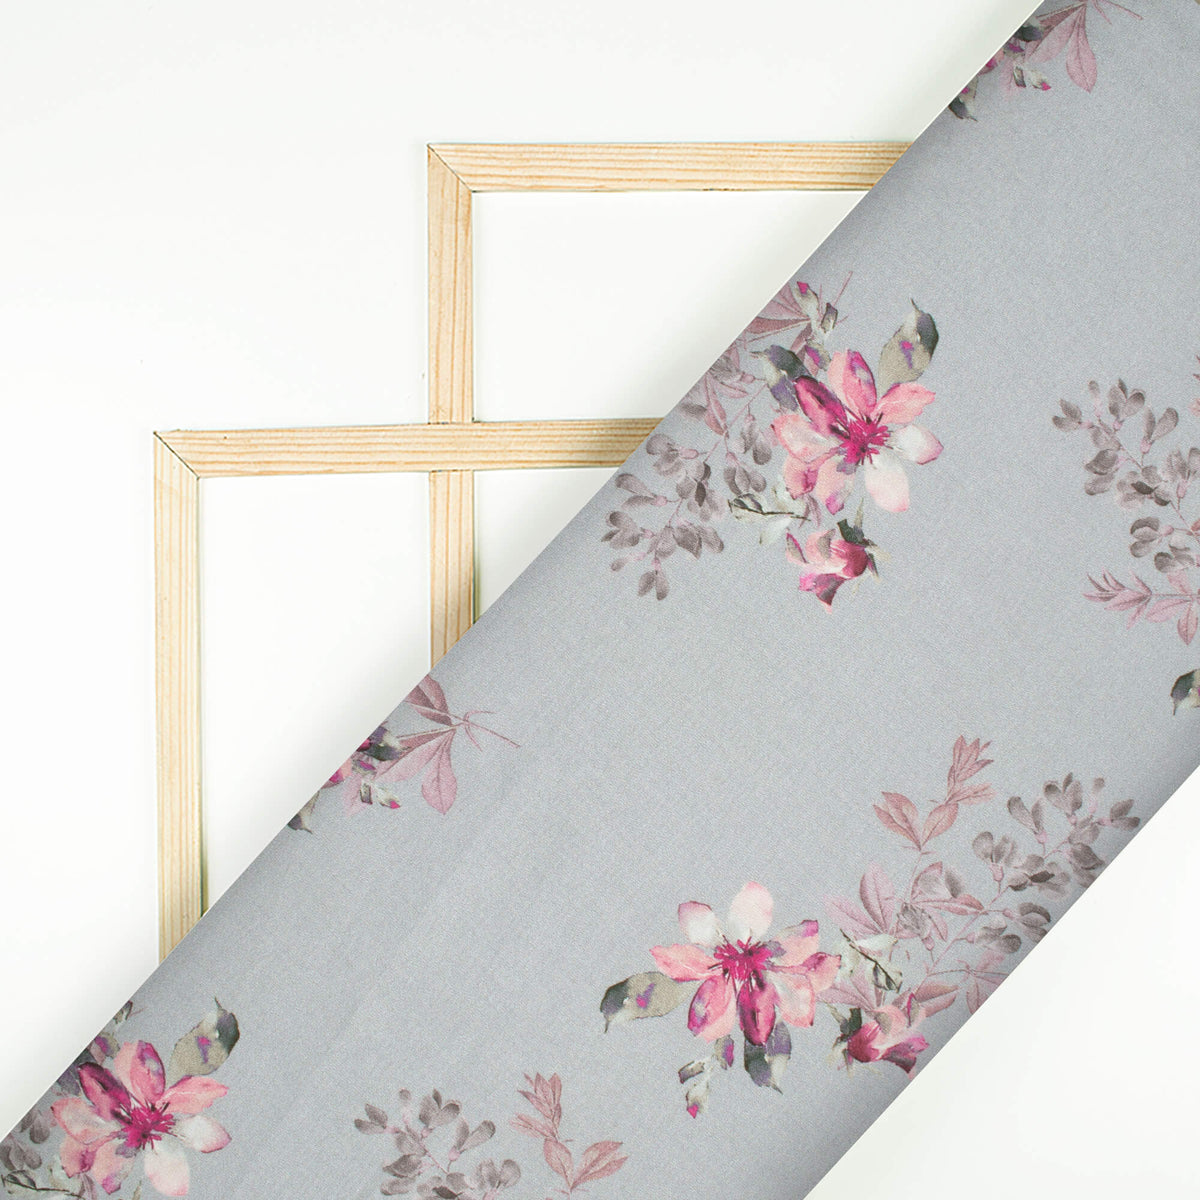 Lava Grey And Salmon Pink Floral Pattern Digital Print Premium Lush Satin Fabric